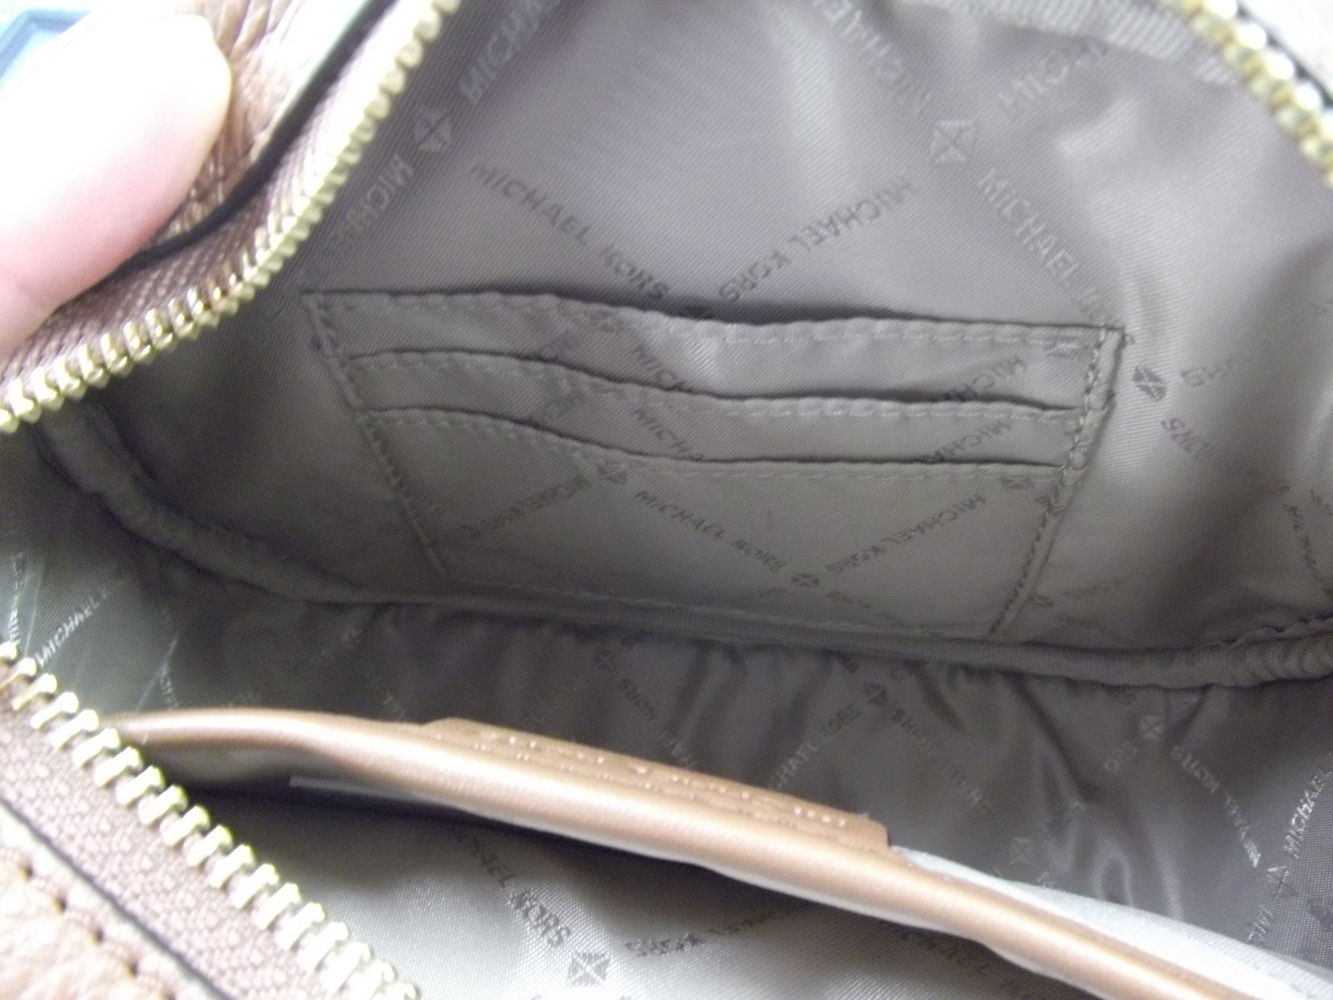 Michael Kors Brynn Small Pebbled Leather Crossbody Bag - Luggage